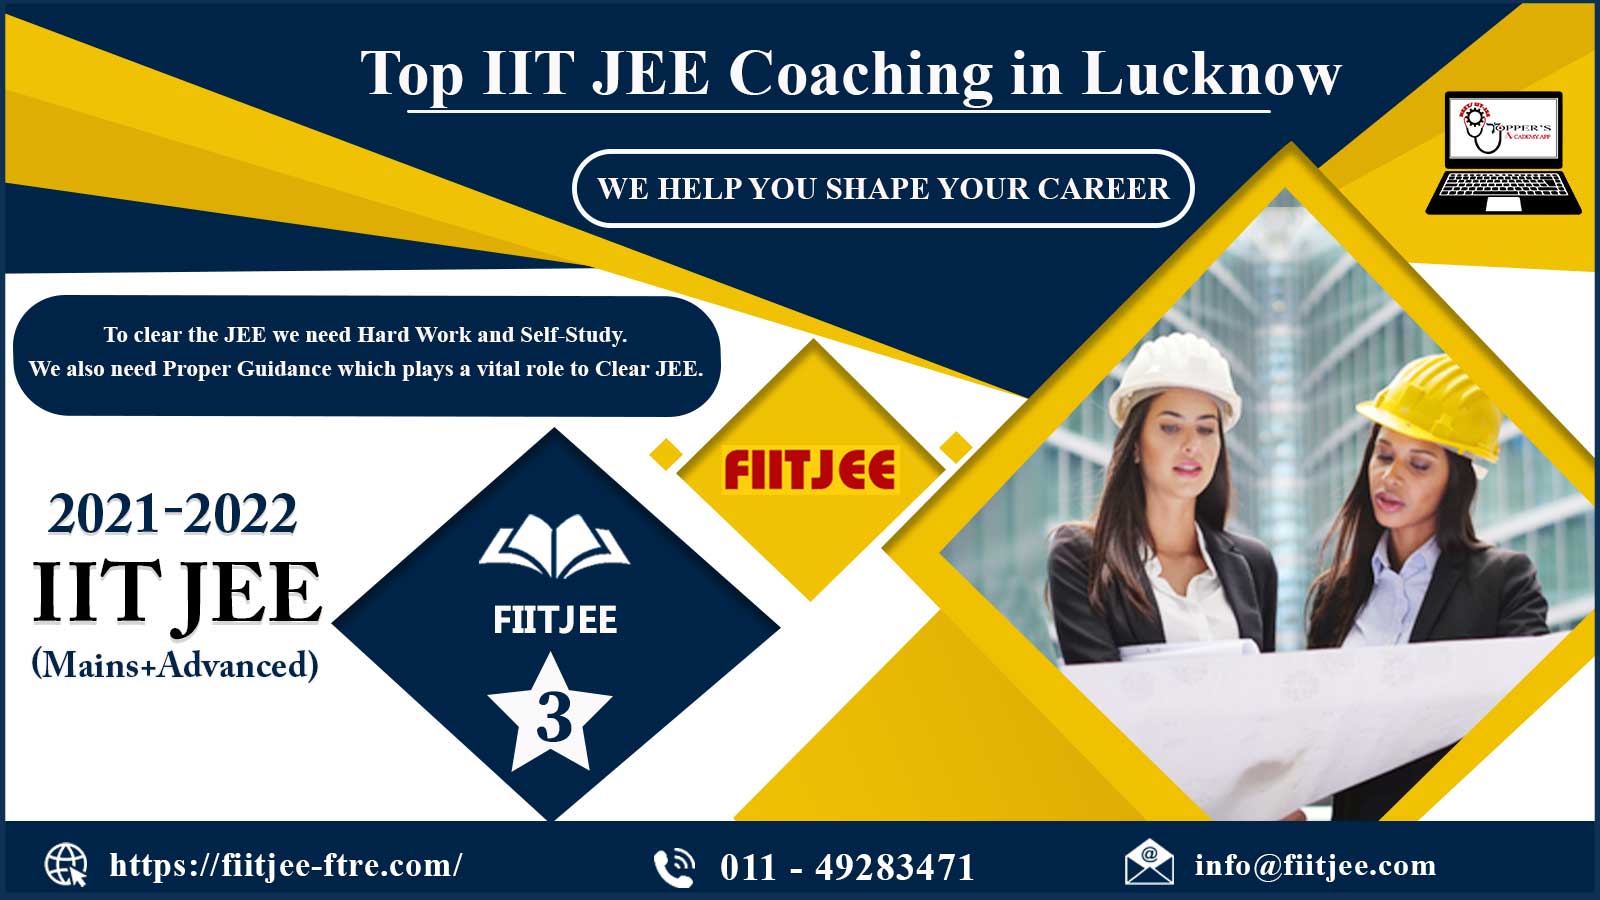 FIITJEE Coaching In Lucknow